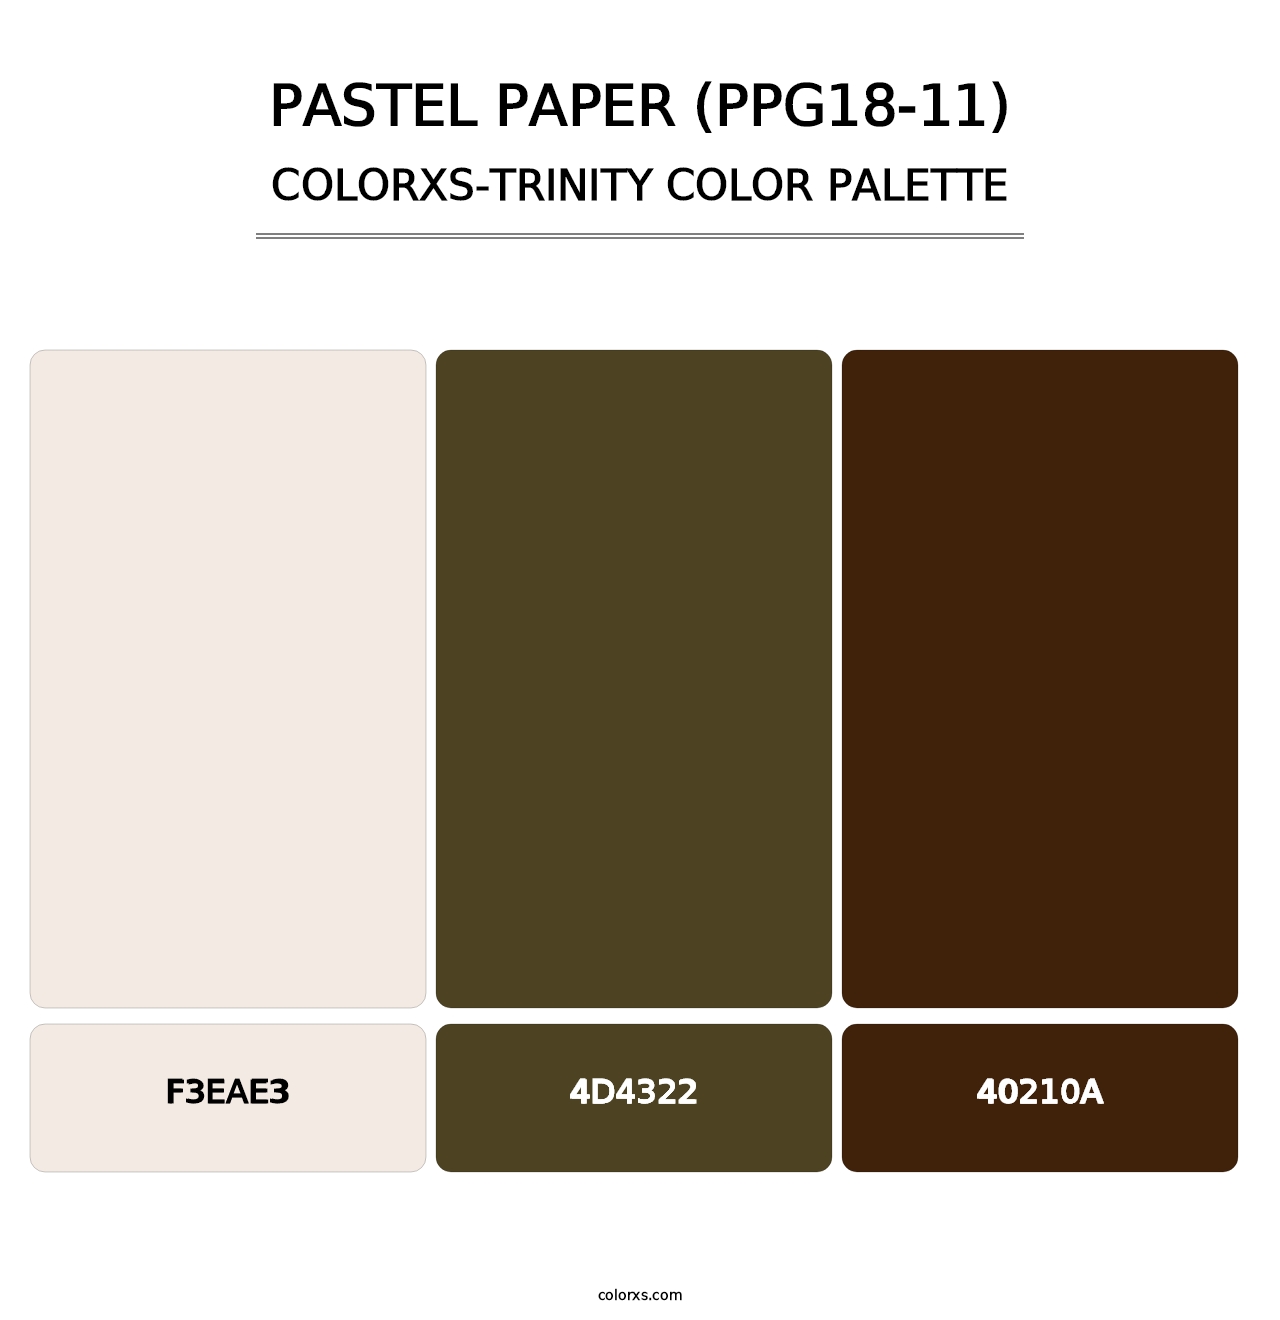 Pastel Paper (PPG18-11) - Colorxs Trinity Palette